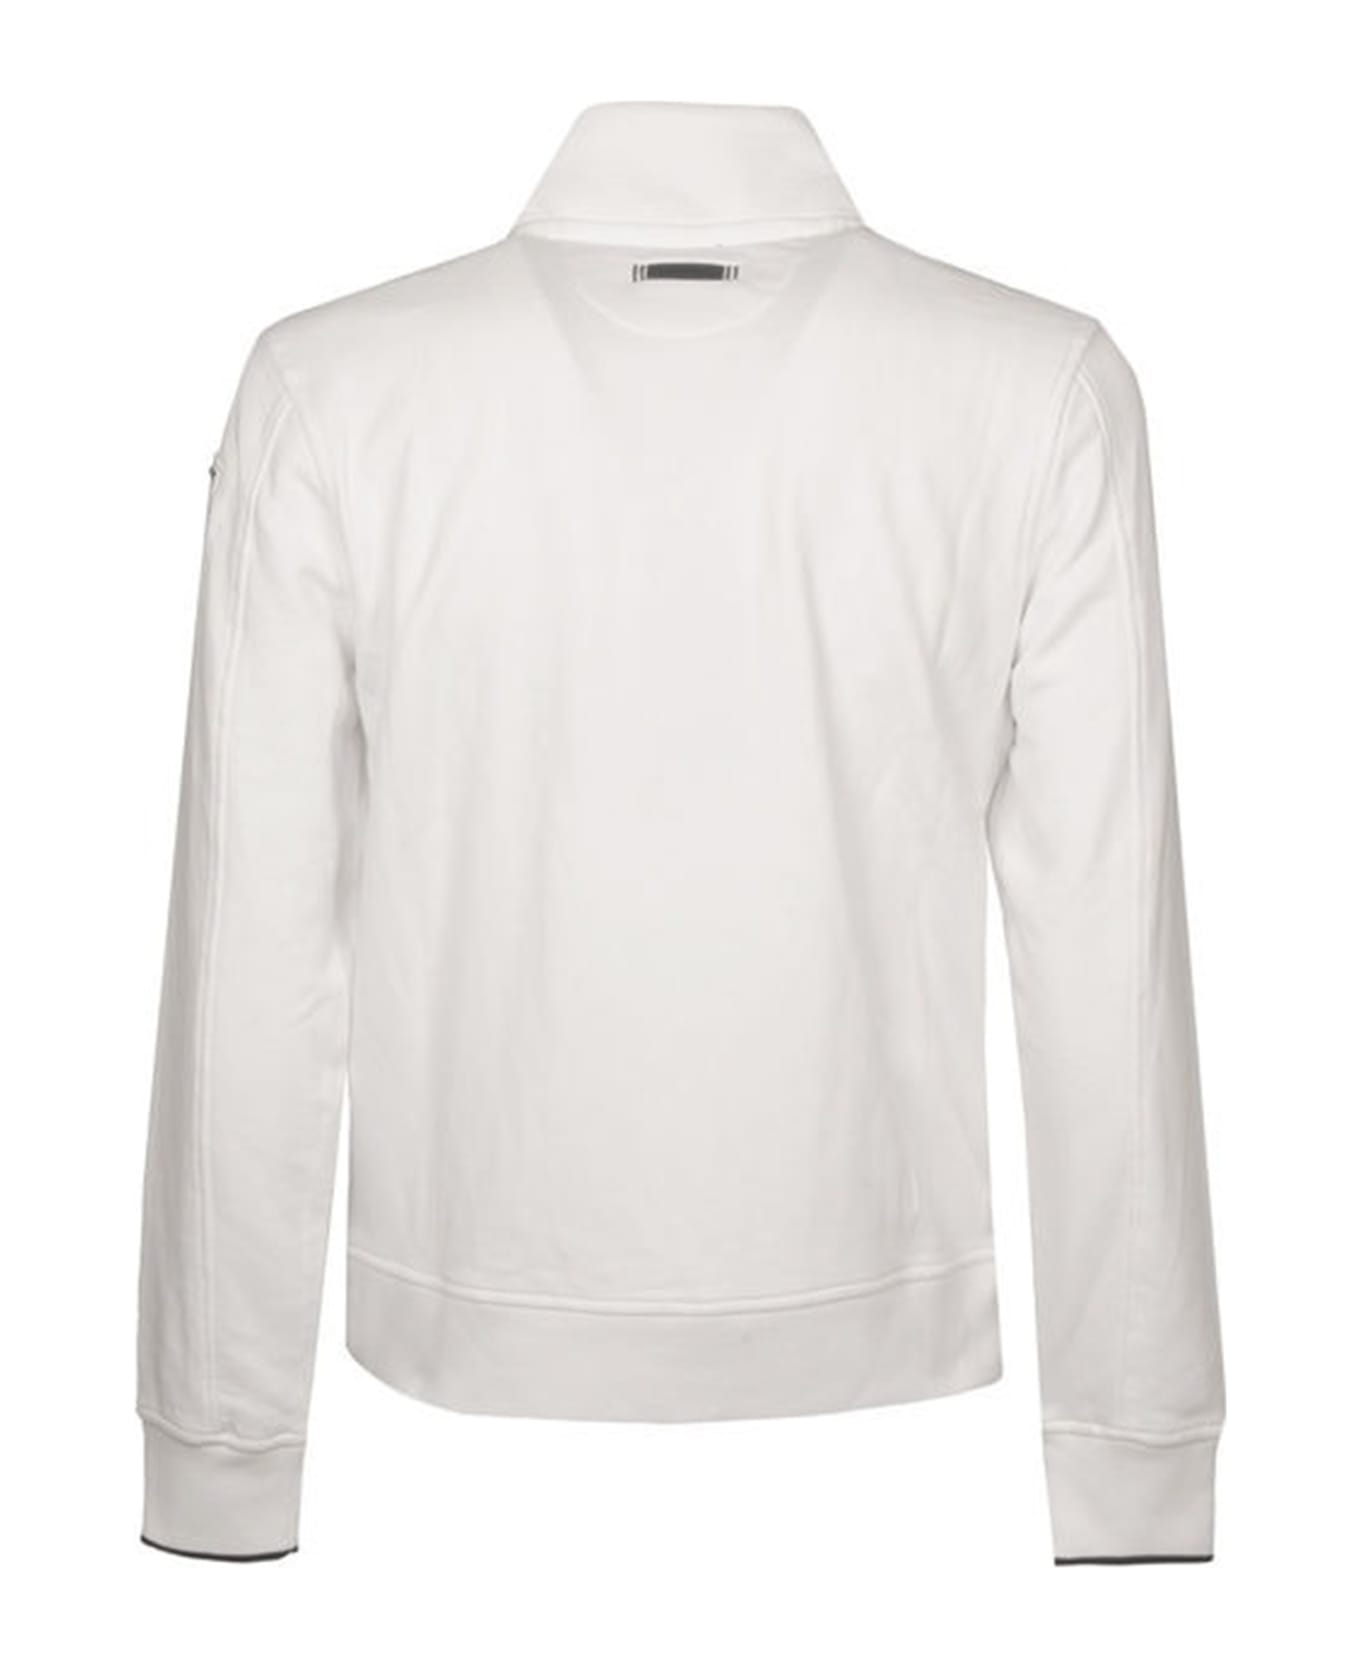 Blauer Open White Sweatshirt With Collar - BIANCO OTTICO